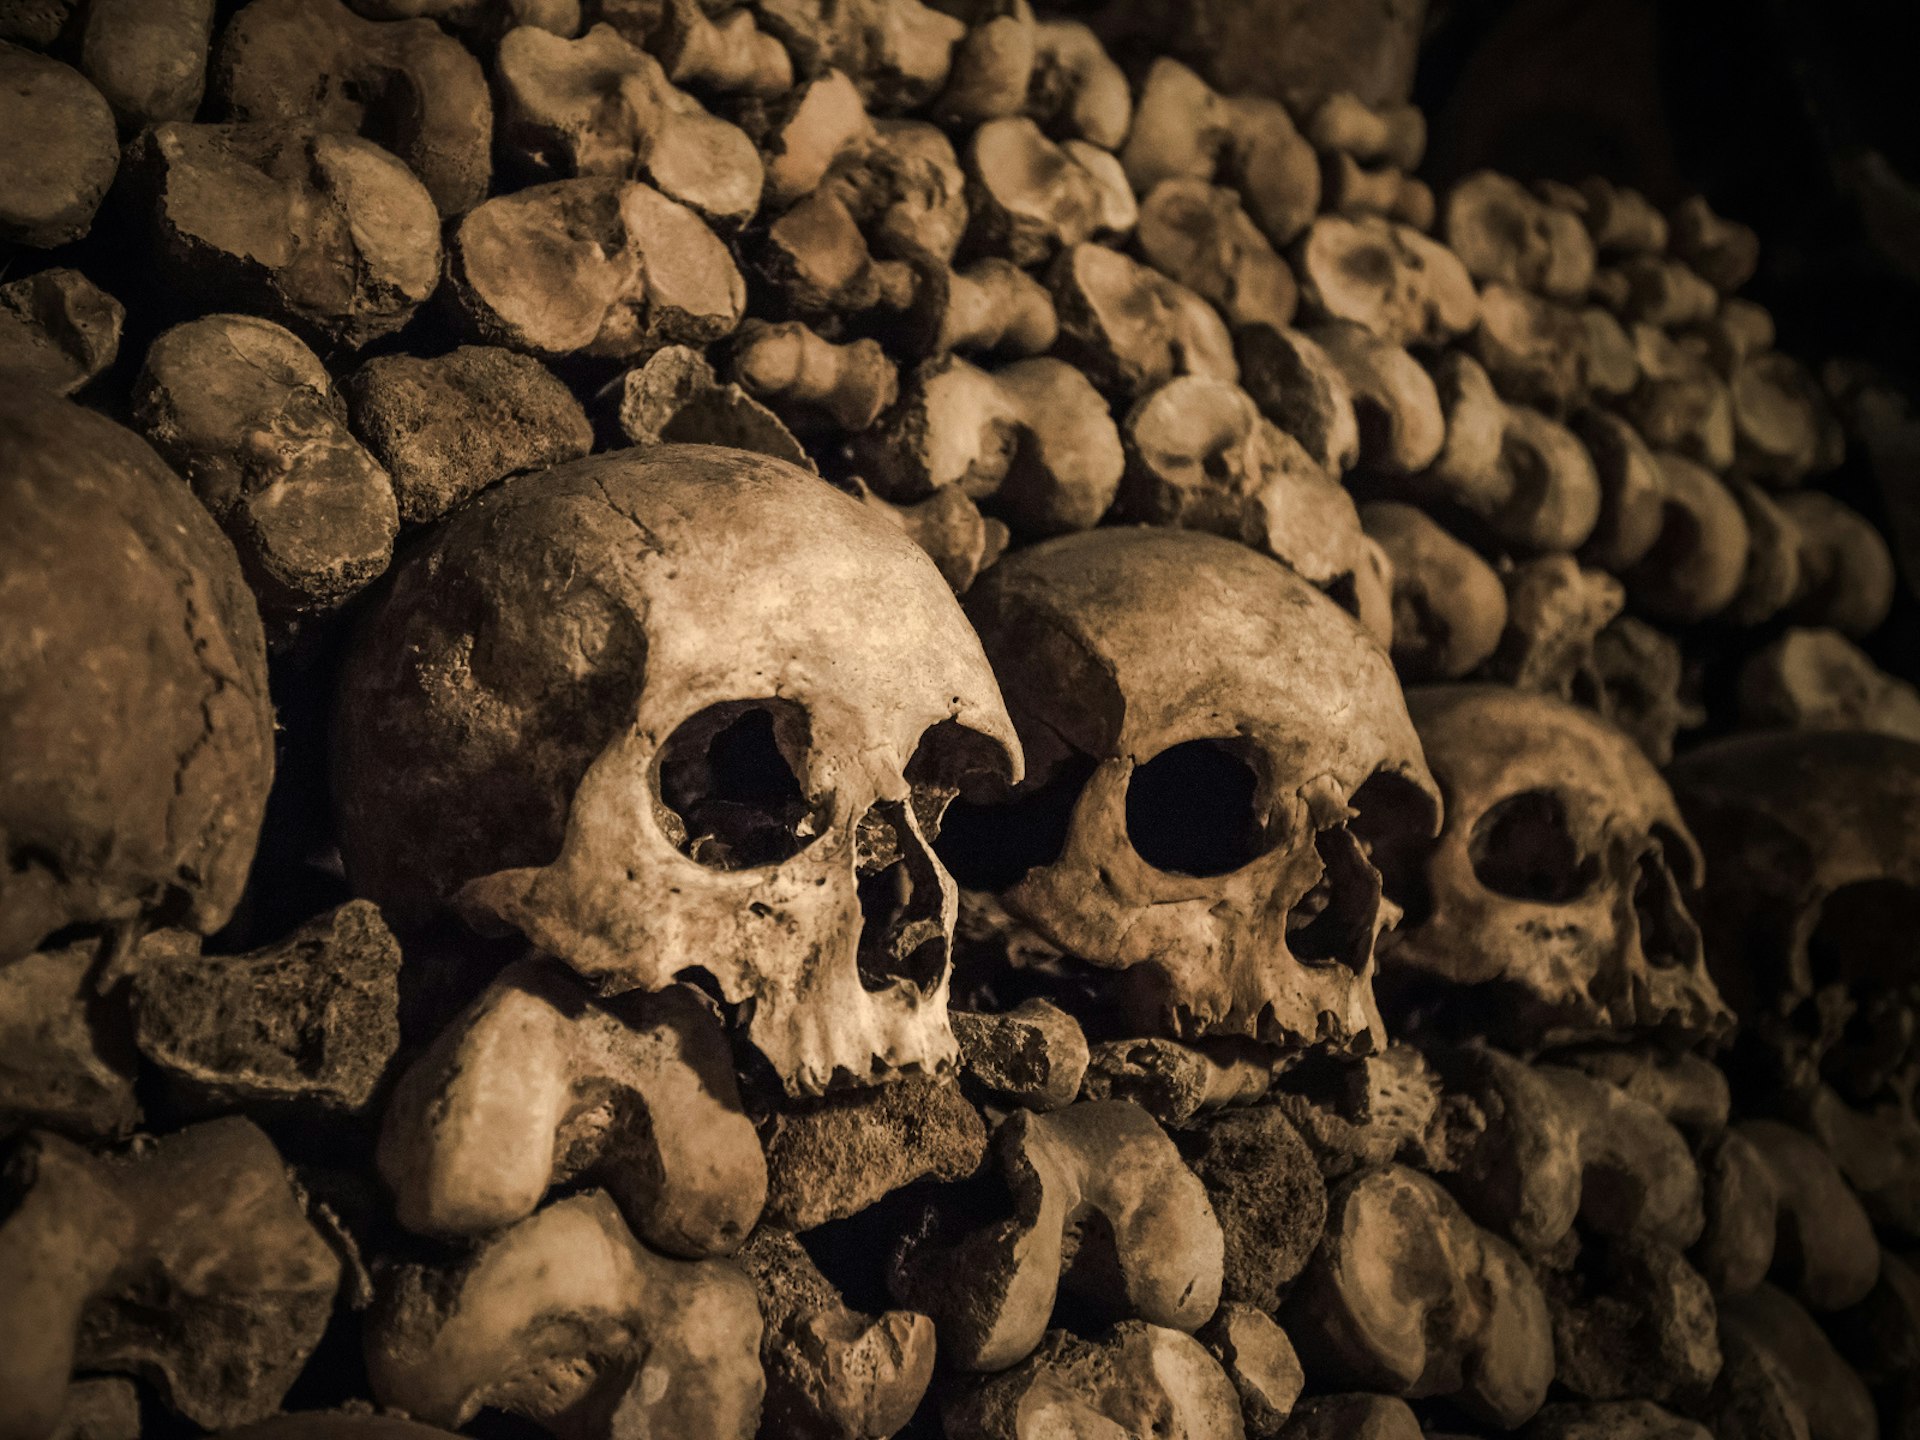 Skulls and bones in the Catacombs beneath Paris